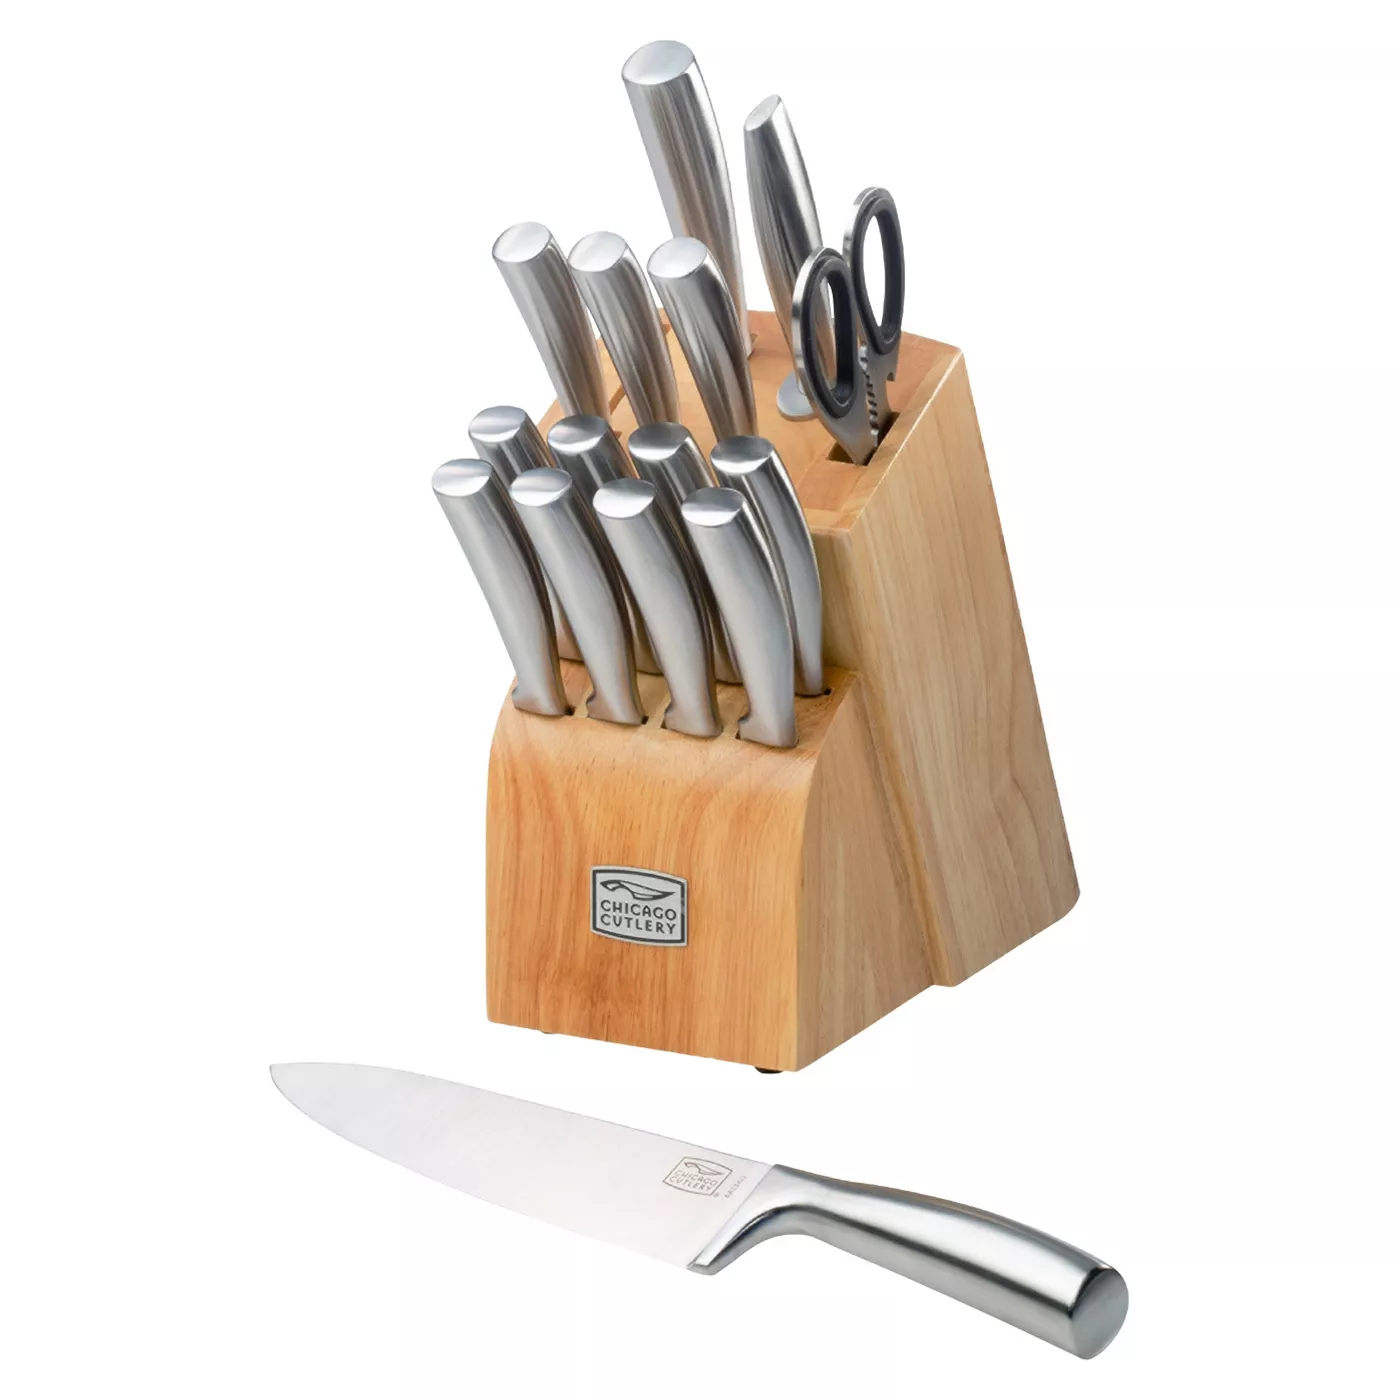 Chicago Cutlery Elston 16pc Knife Block Set - image 1 of 4